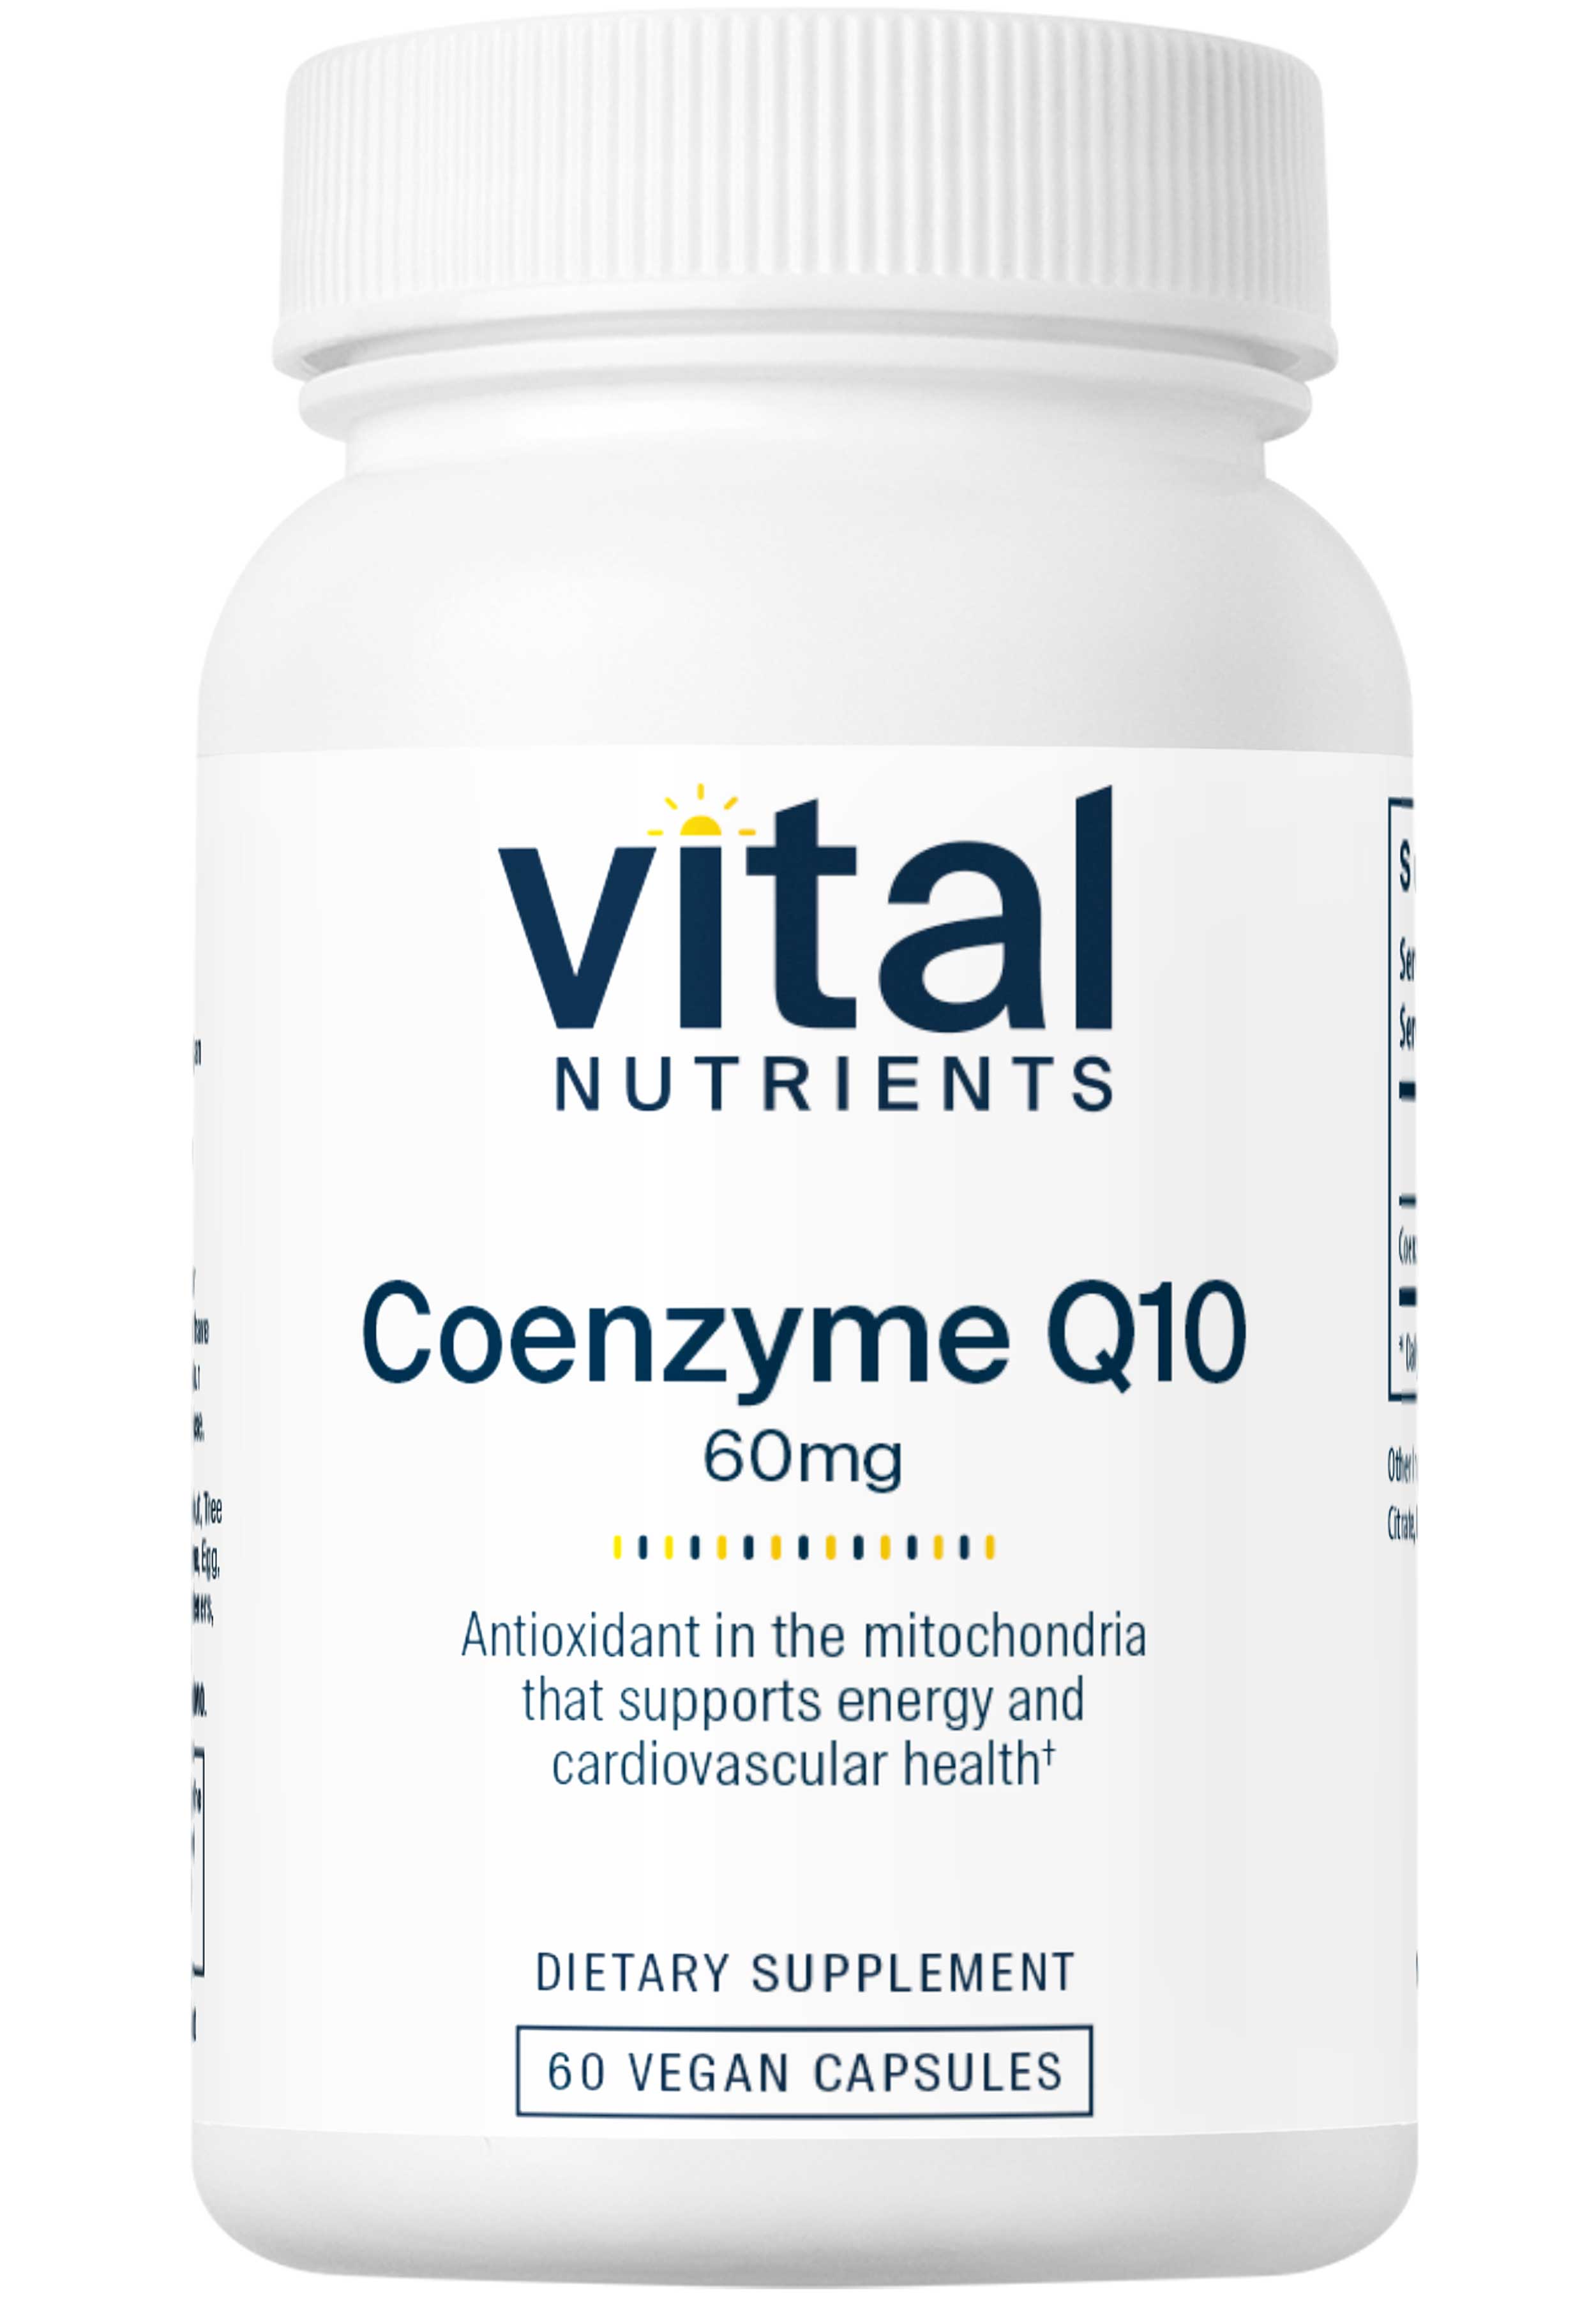 Vital Nutrients CoEnzyme Q10 60mg